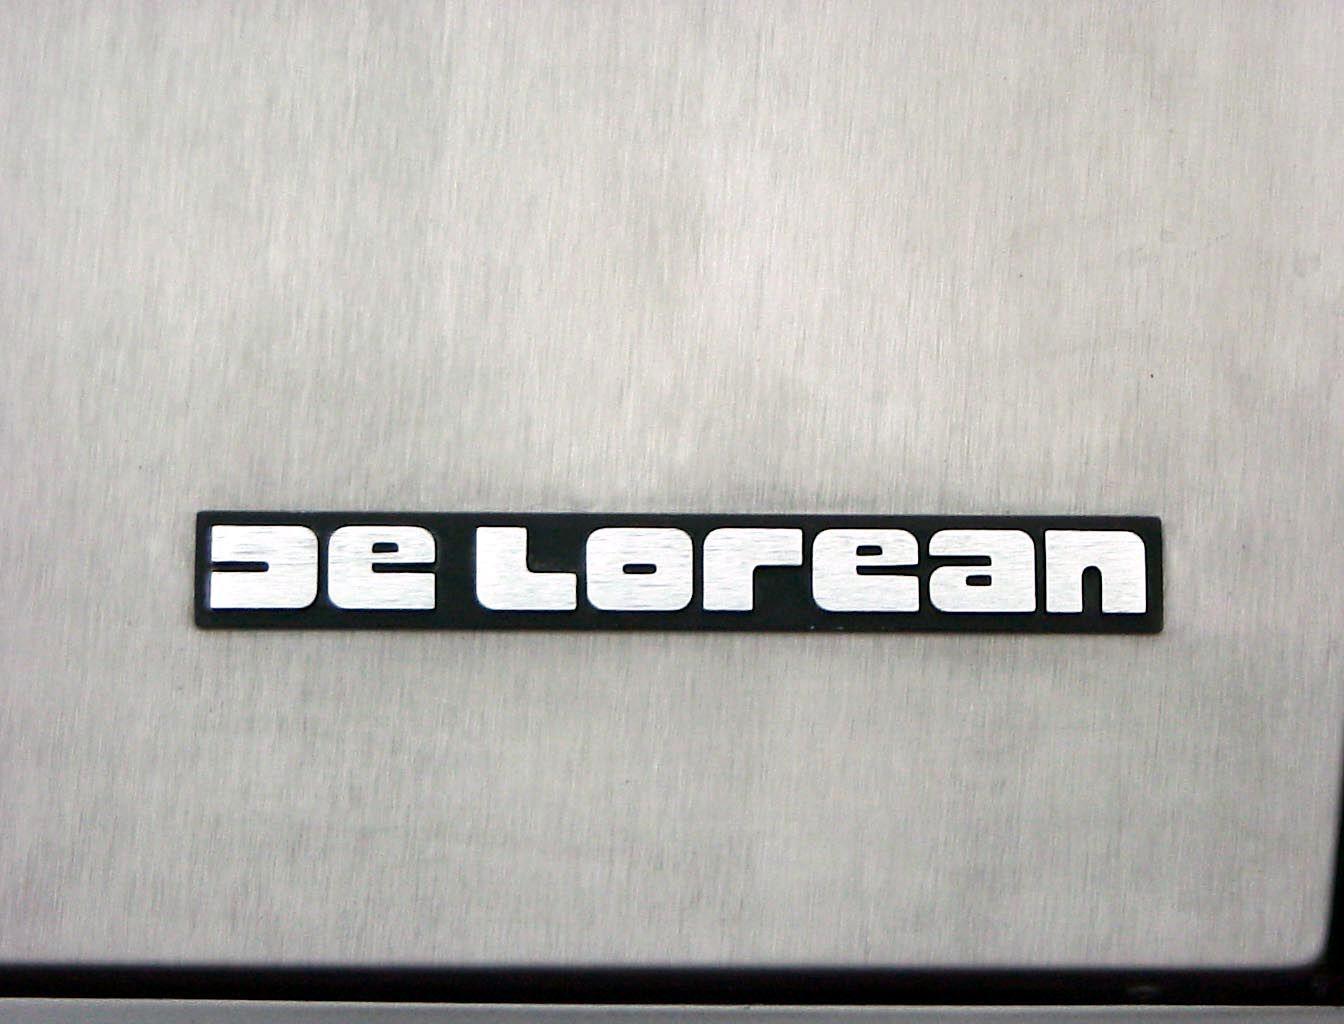 DMC DeLorean Logo - DeLorean - The Car: Production Changes